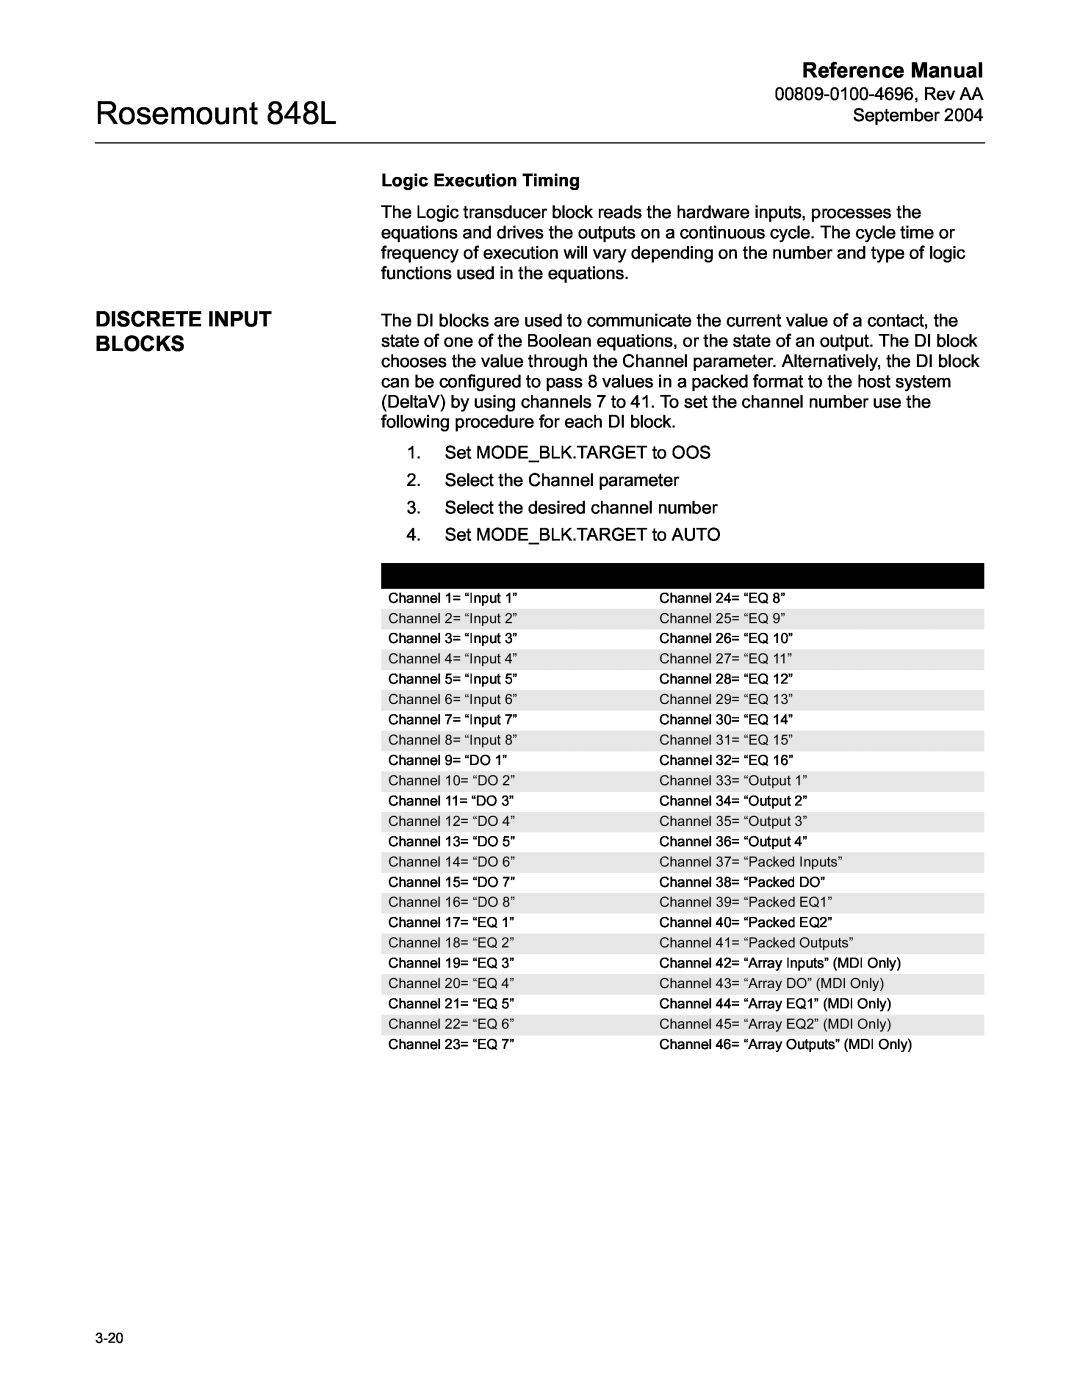 Emerson manual Discrete Input Blocks, Rosemount 848L, Reference Manual 